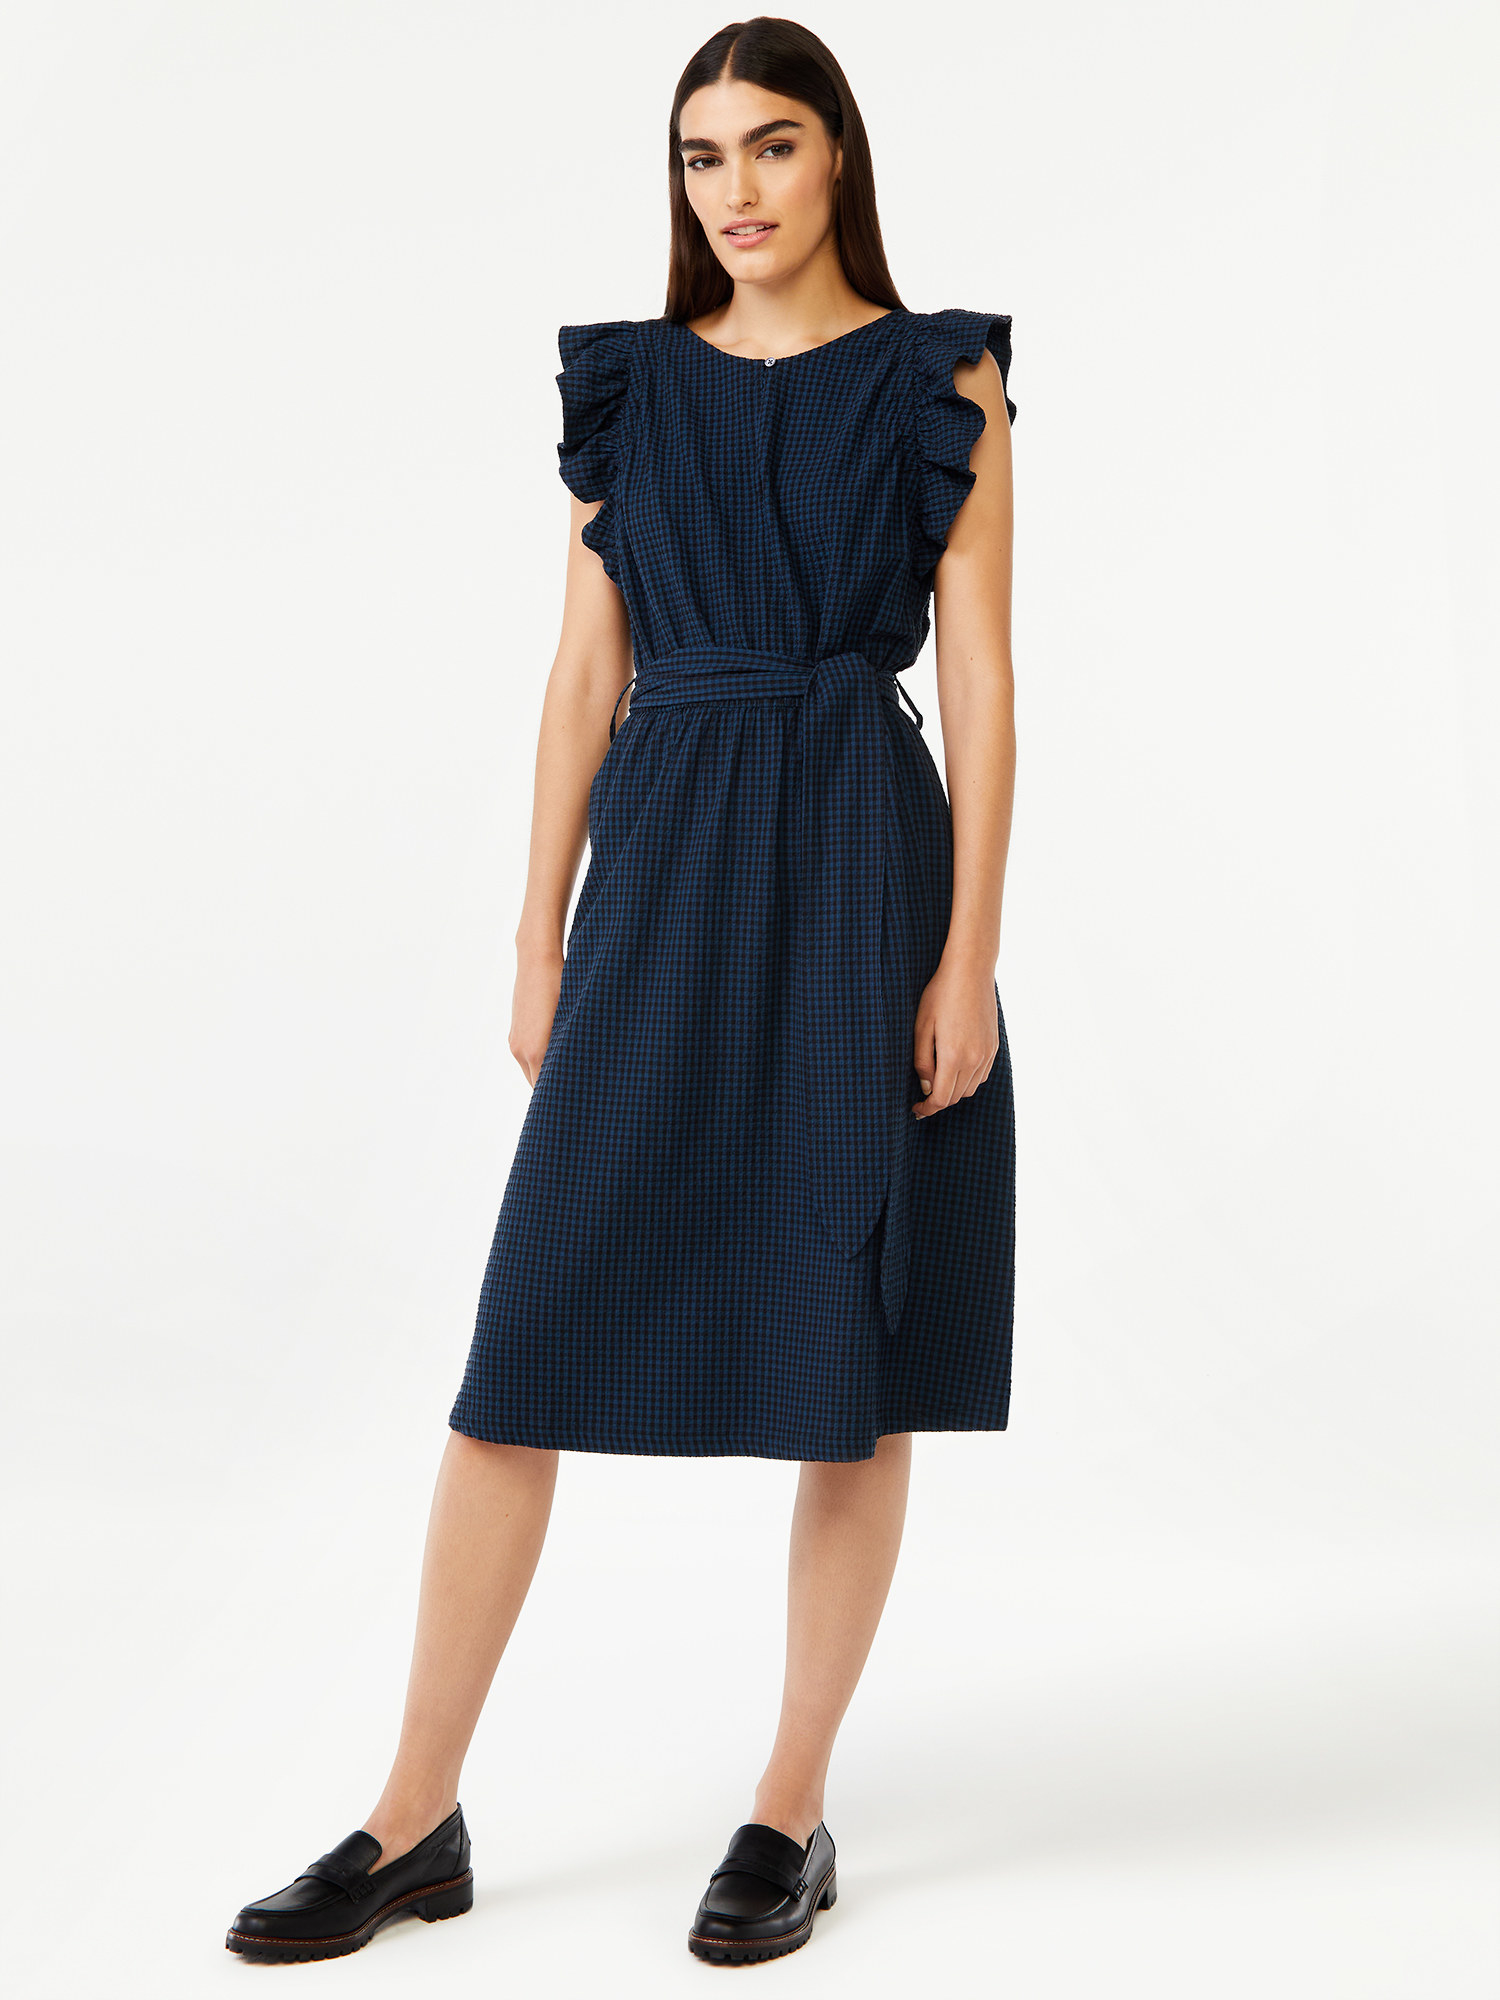 model wearing the dress in blue gingham